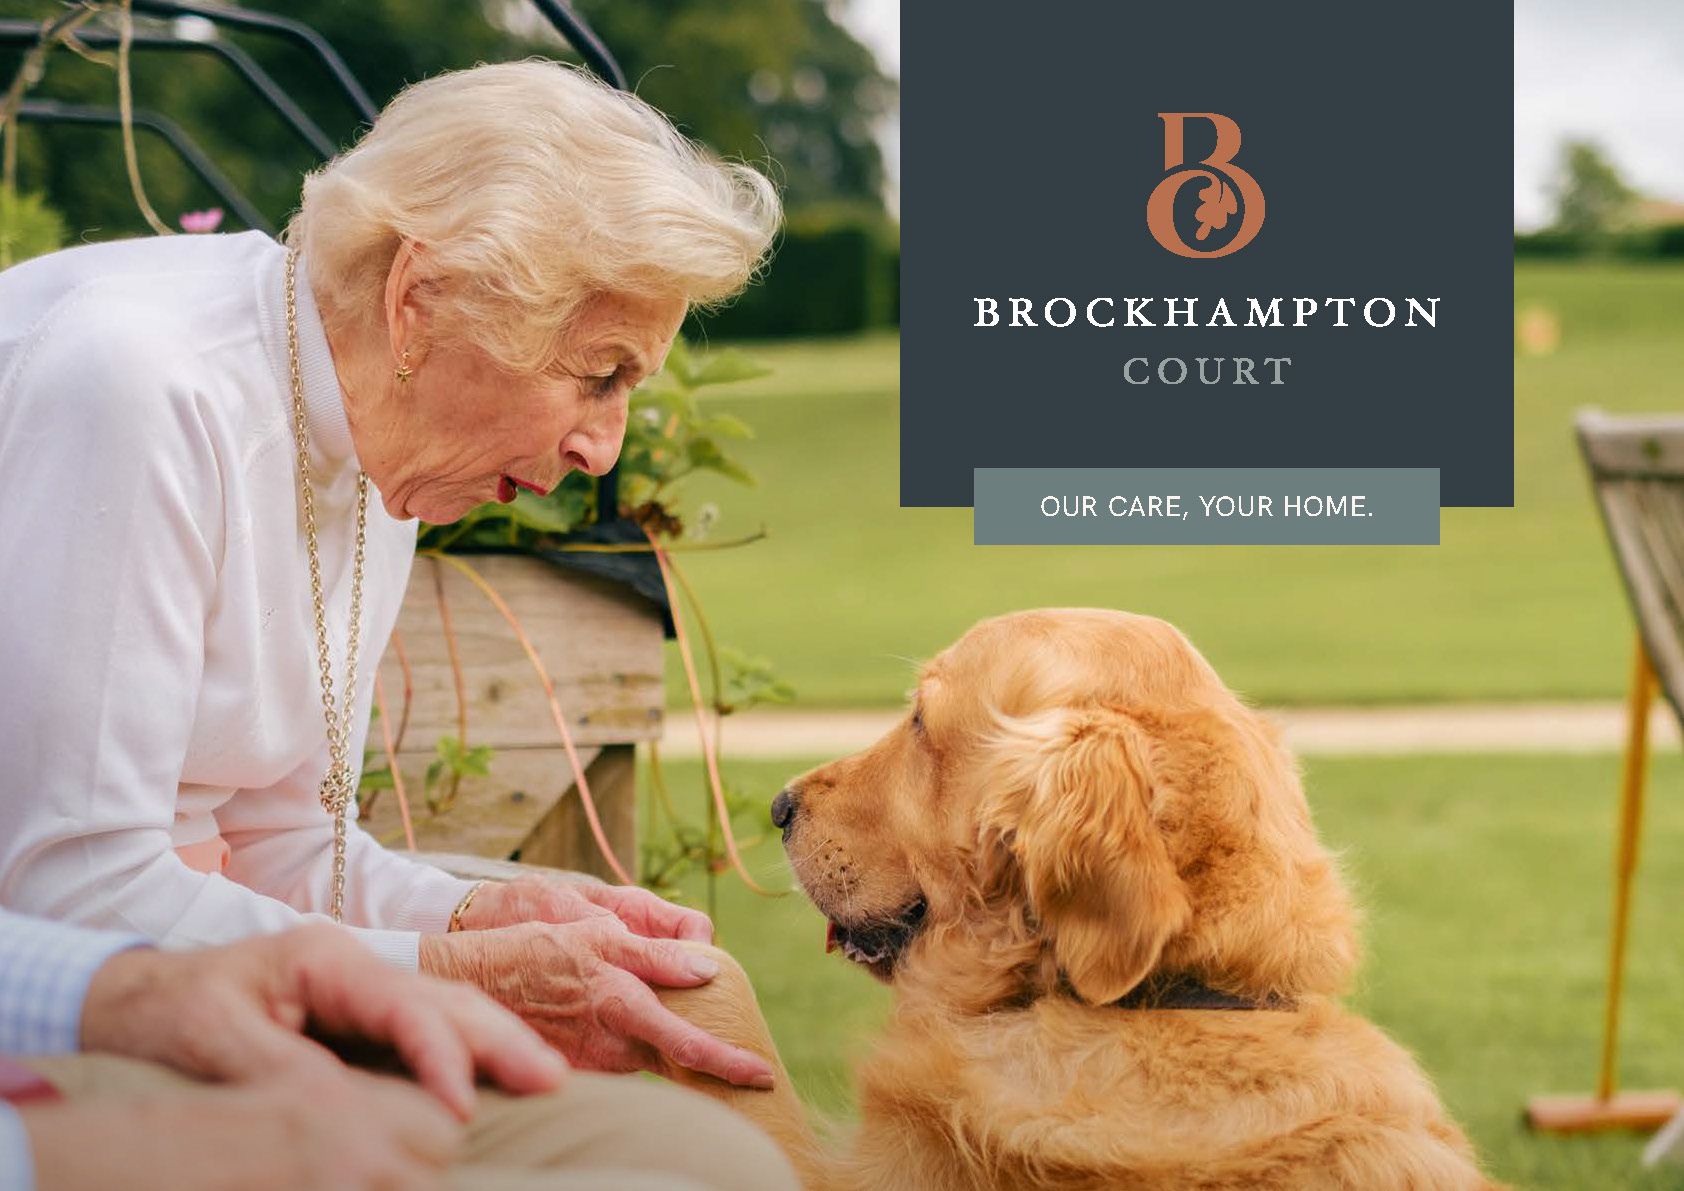 Brockhampton Court Brochure